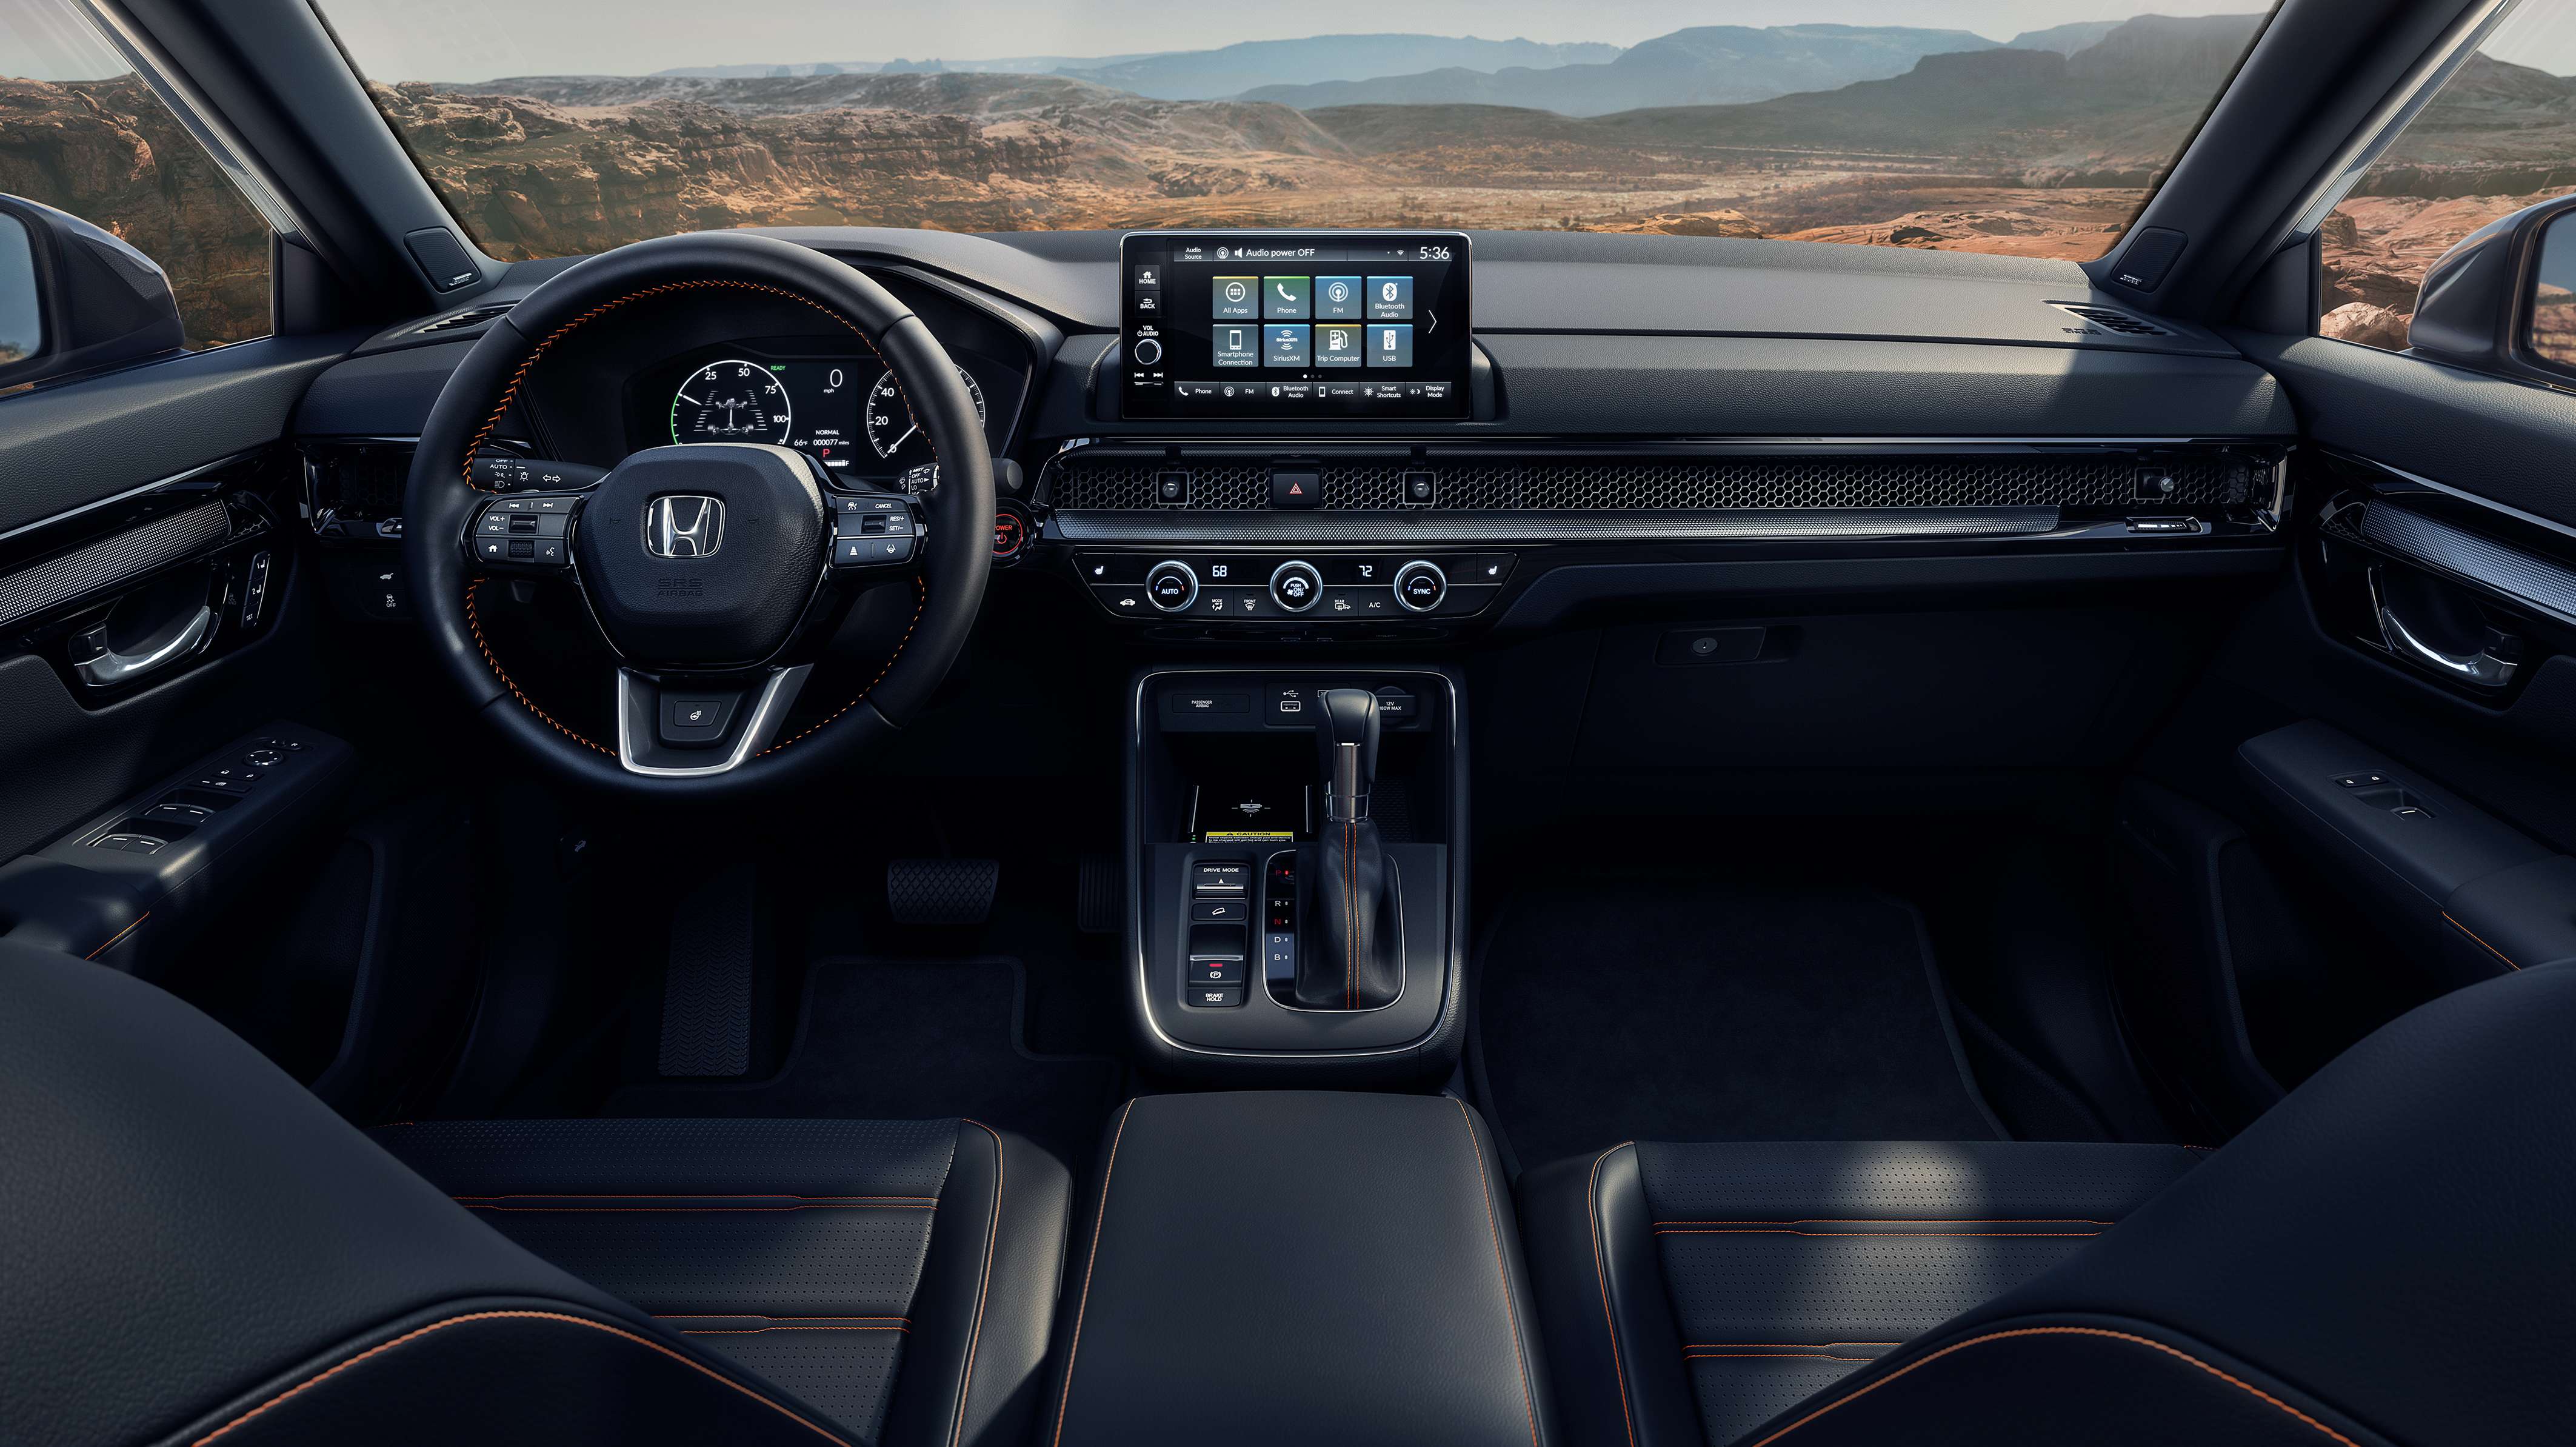 2023 Honda CRV interior Paul Tan's Automotive News